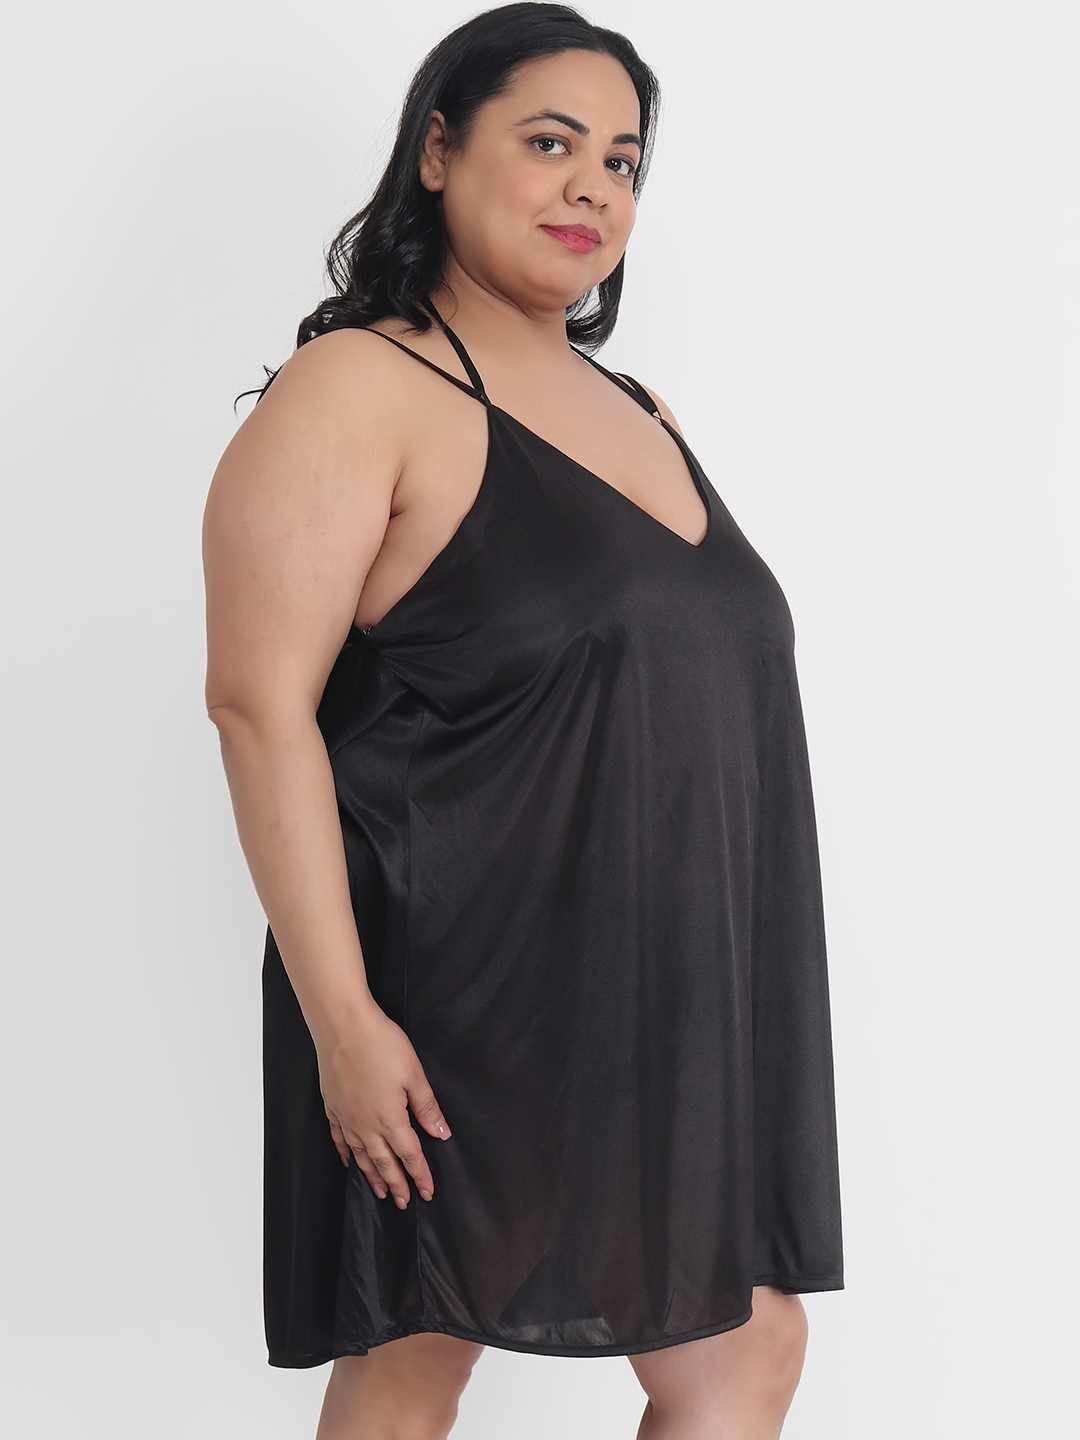 Plus Size Sexy Solid Satin Black Babydoll and Bikini Dress Dress for  Honeymoon BB37K